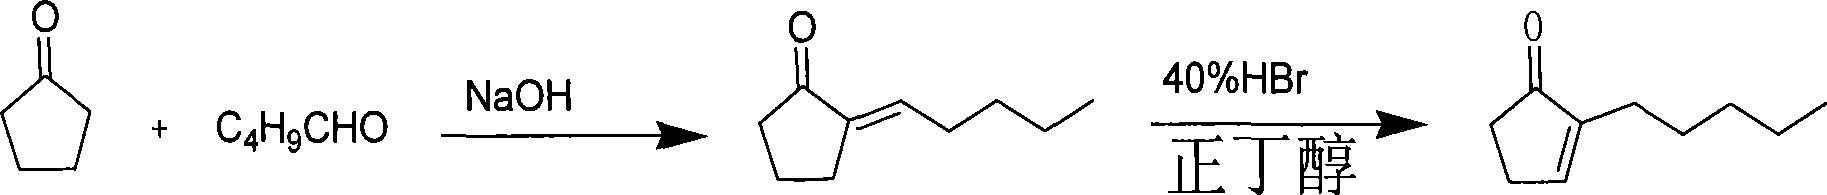 Method for preparing methyl dihydrojasmonate